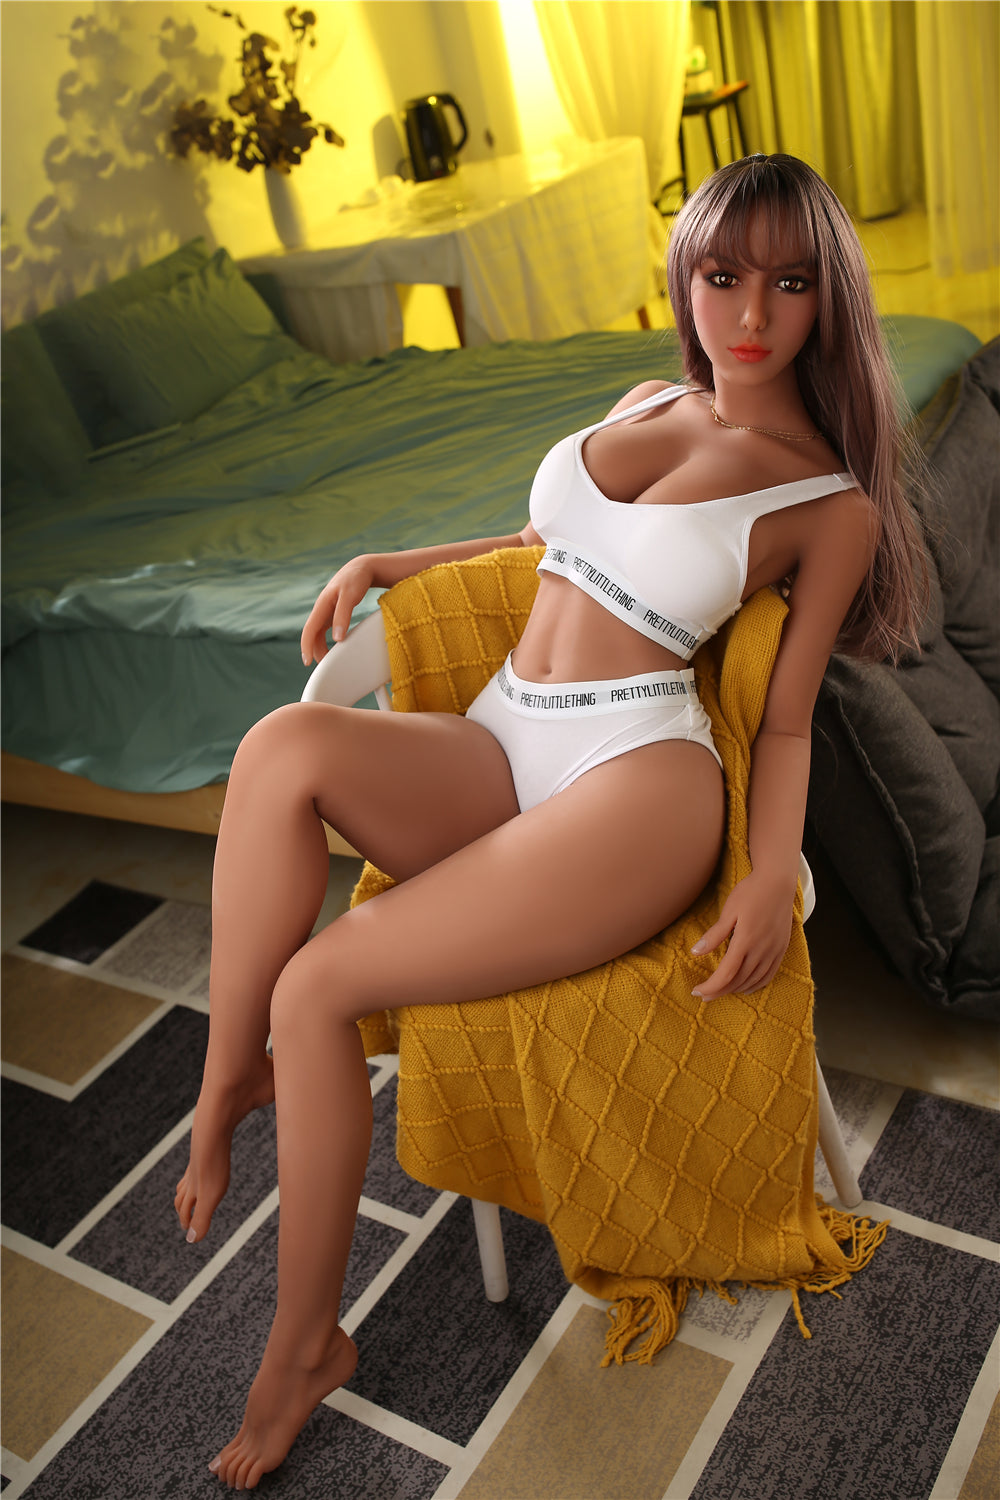 Neodoll Racy Scarlet - Realistic Sex Doll - 164 Pluscm - Brown